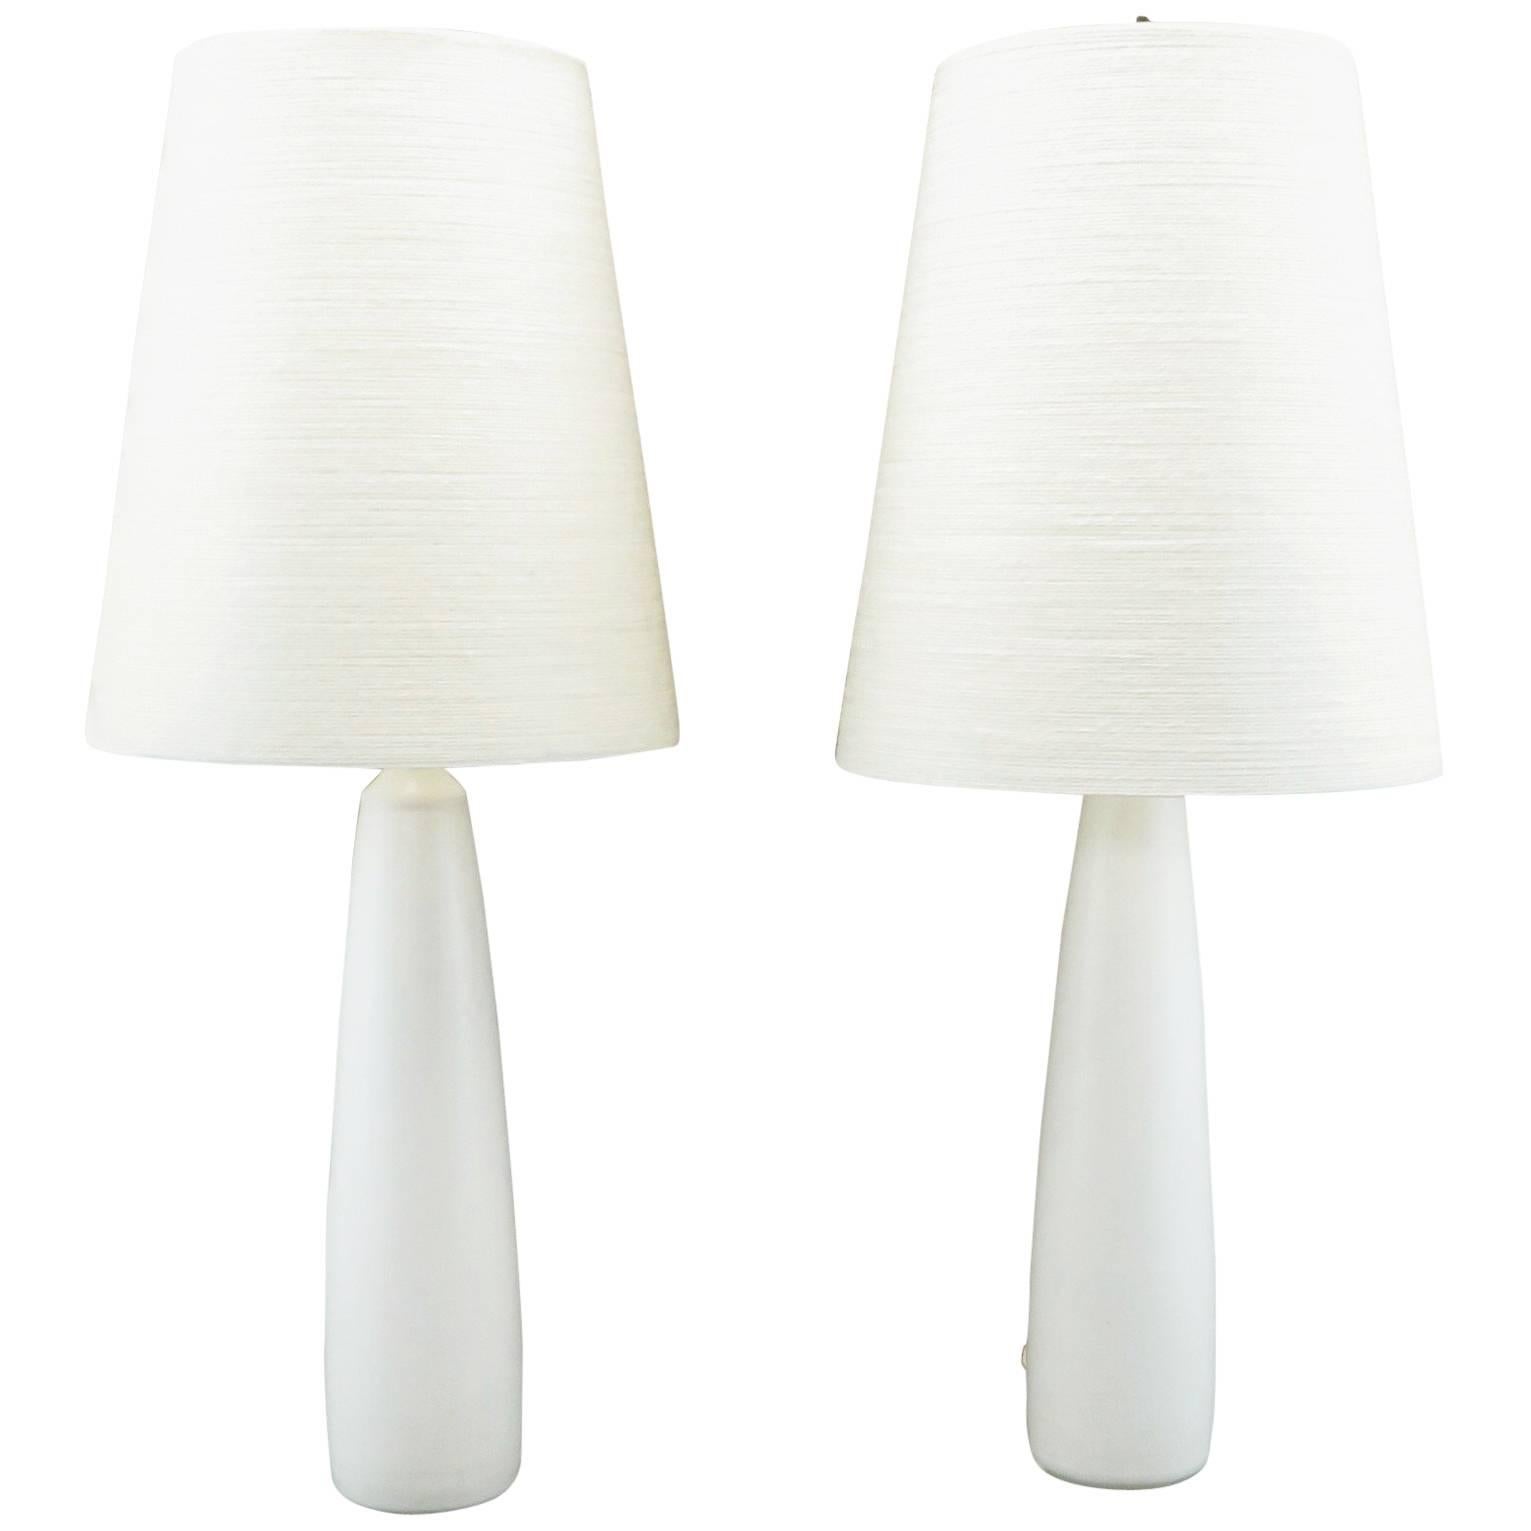 Pair of Mid-Century Modern Lotte & Gunnar Bostlund Ceramic Table Lamps, Denmark